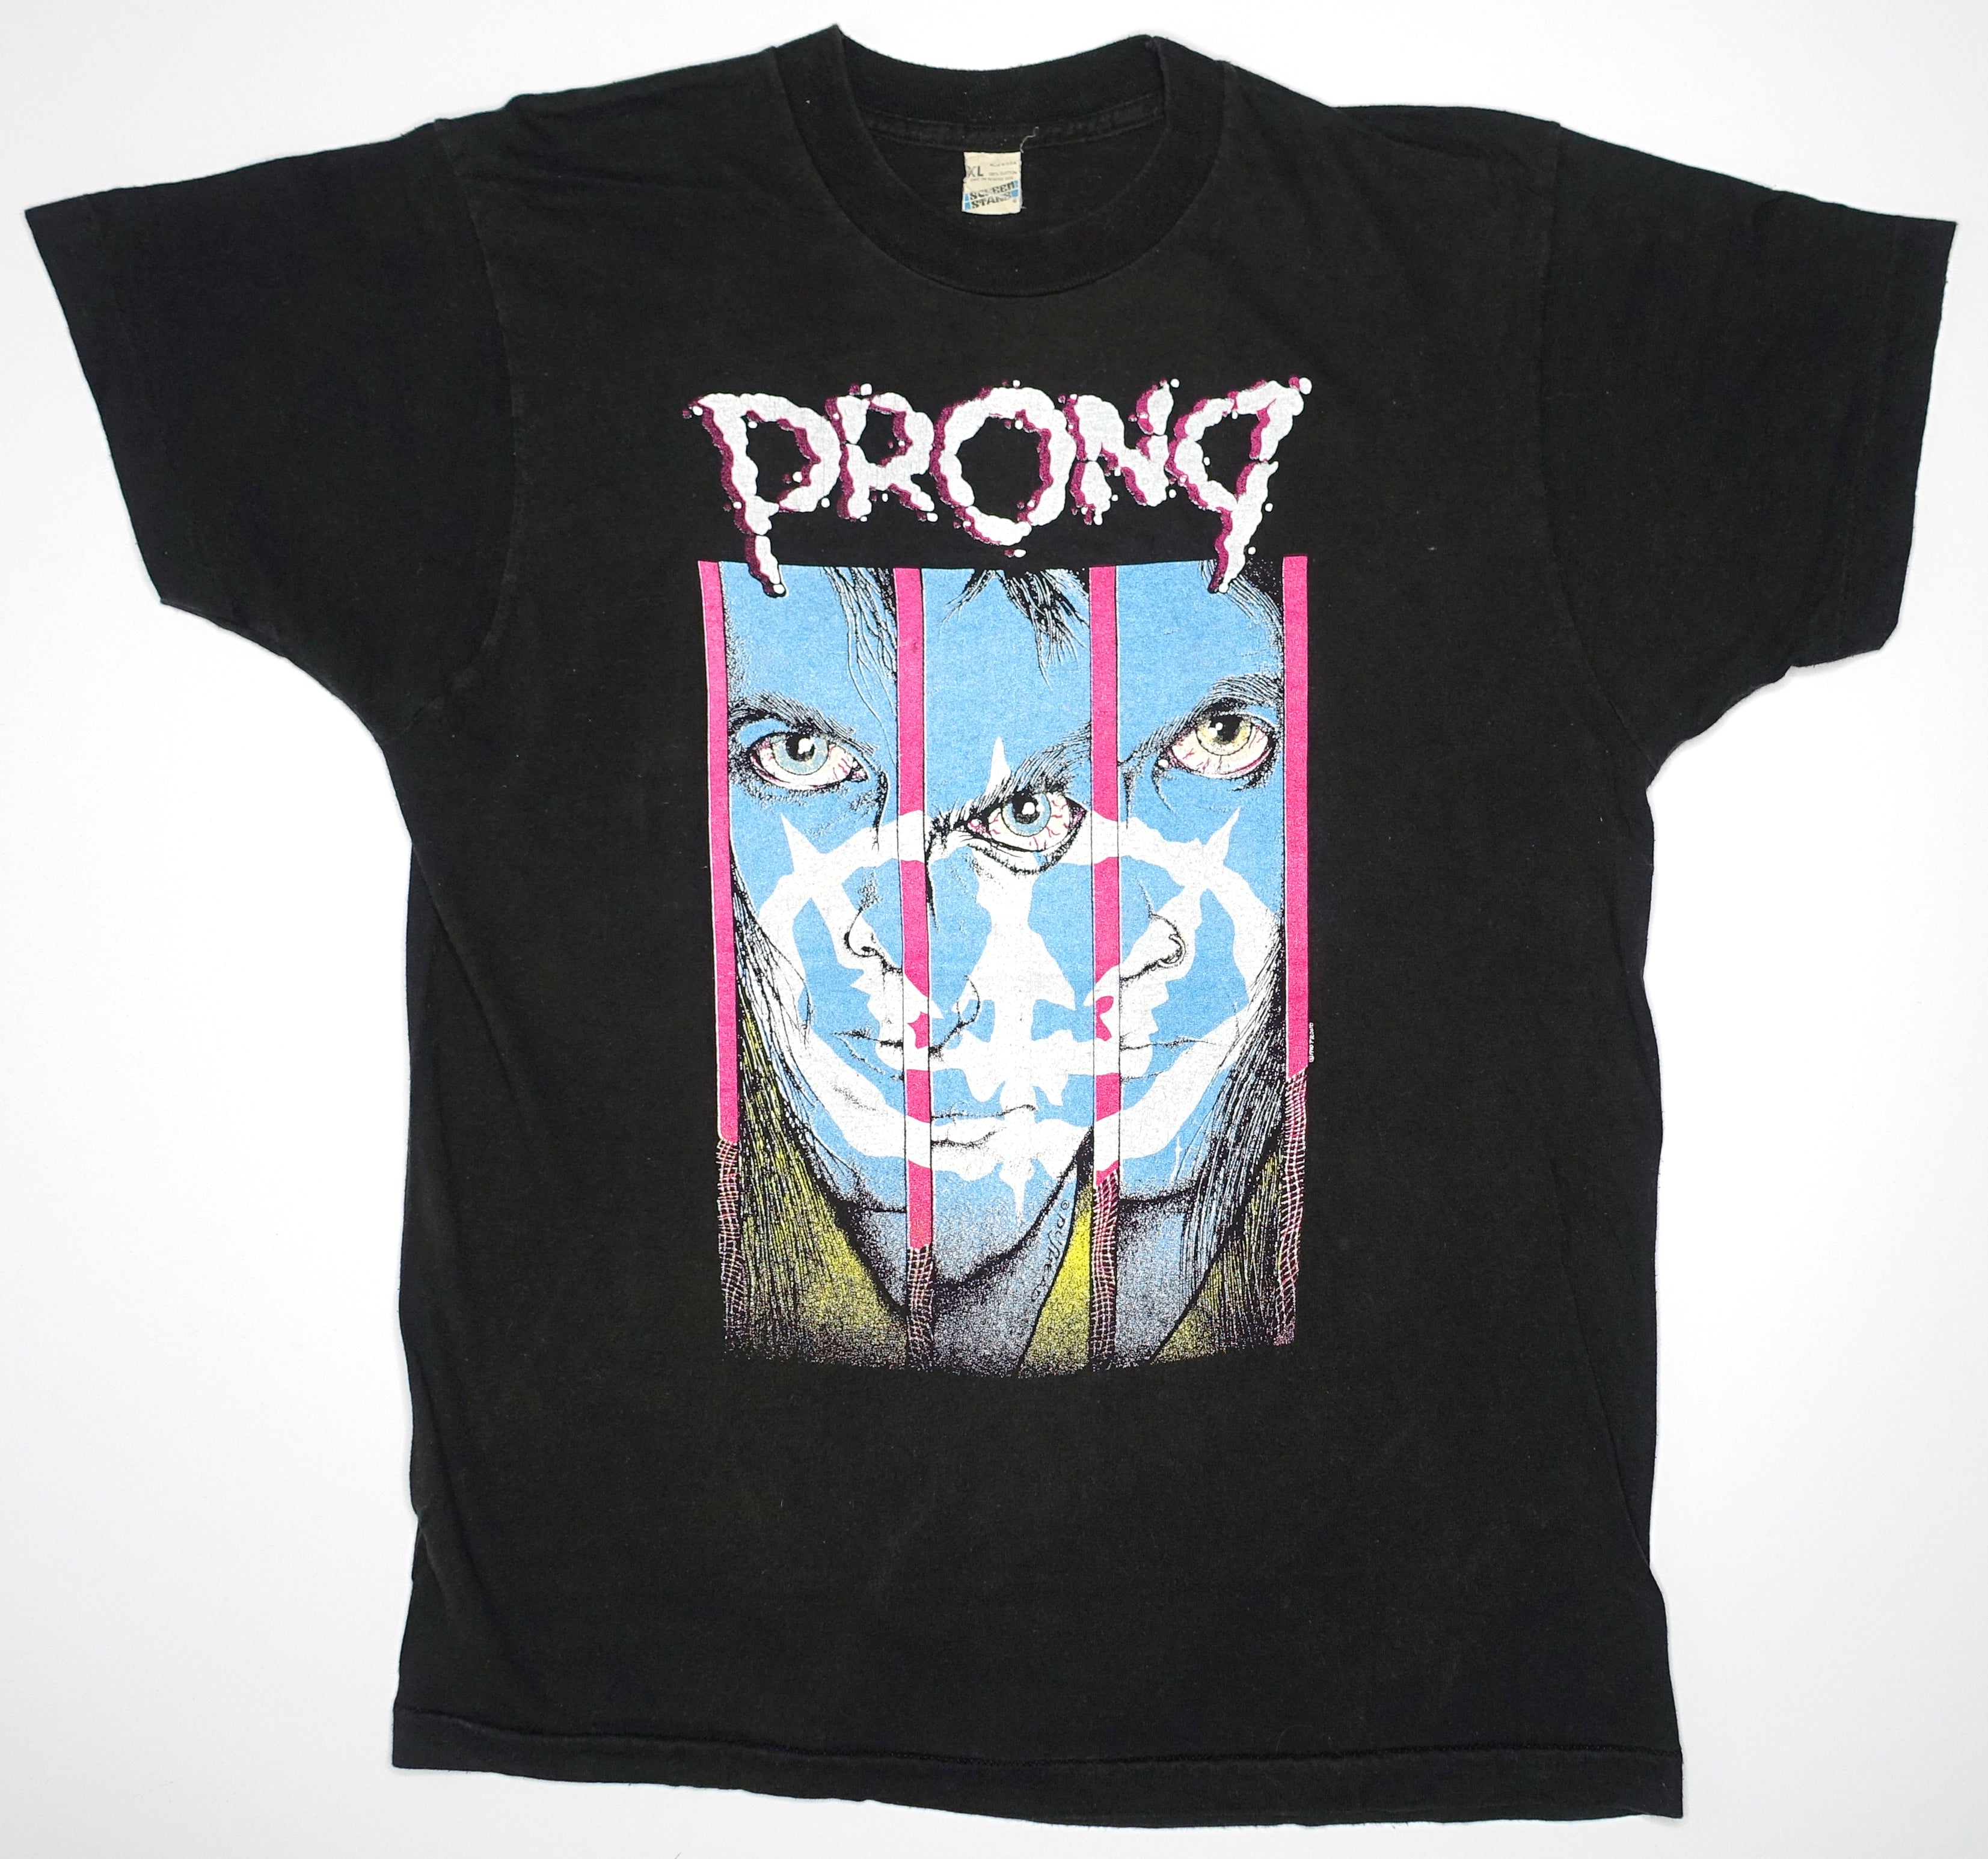 Prong - Beg To Differ American 1990 Tour Shirt Size Large / Medium (Pushead Design)